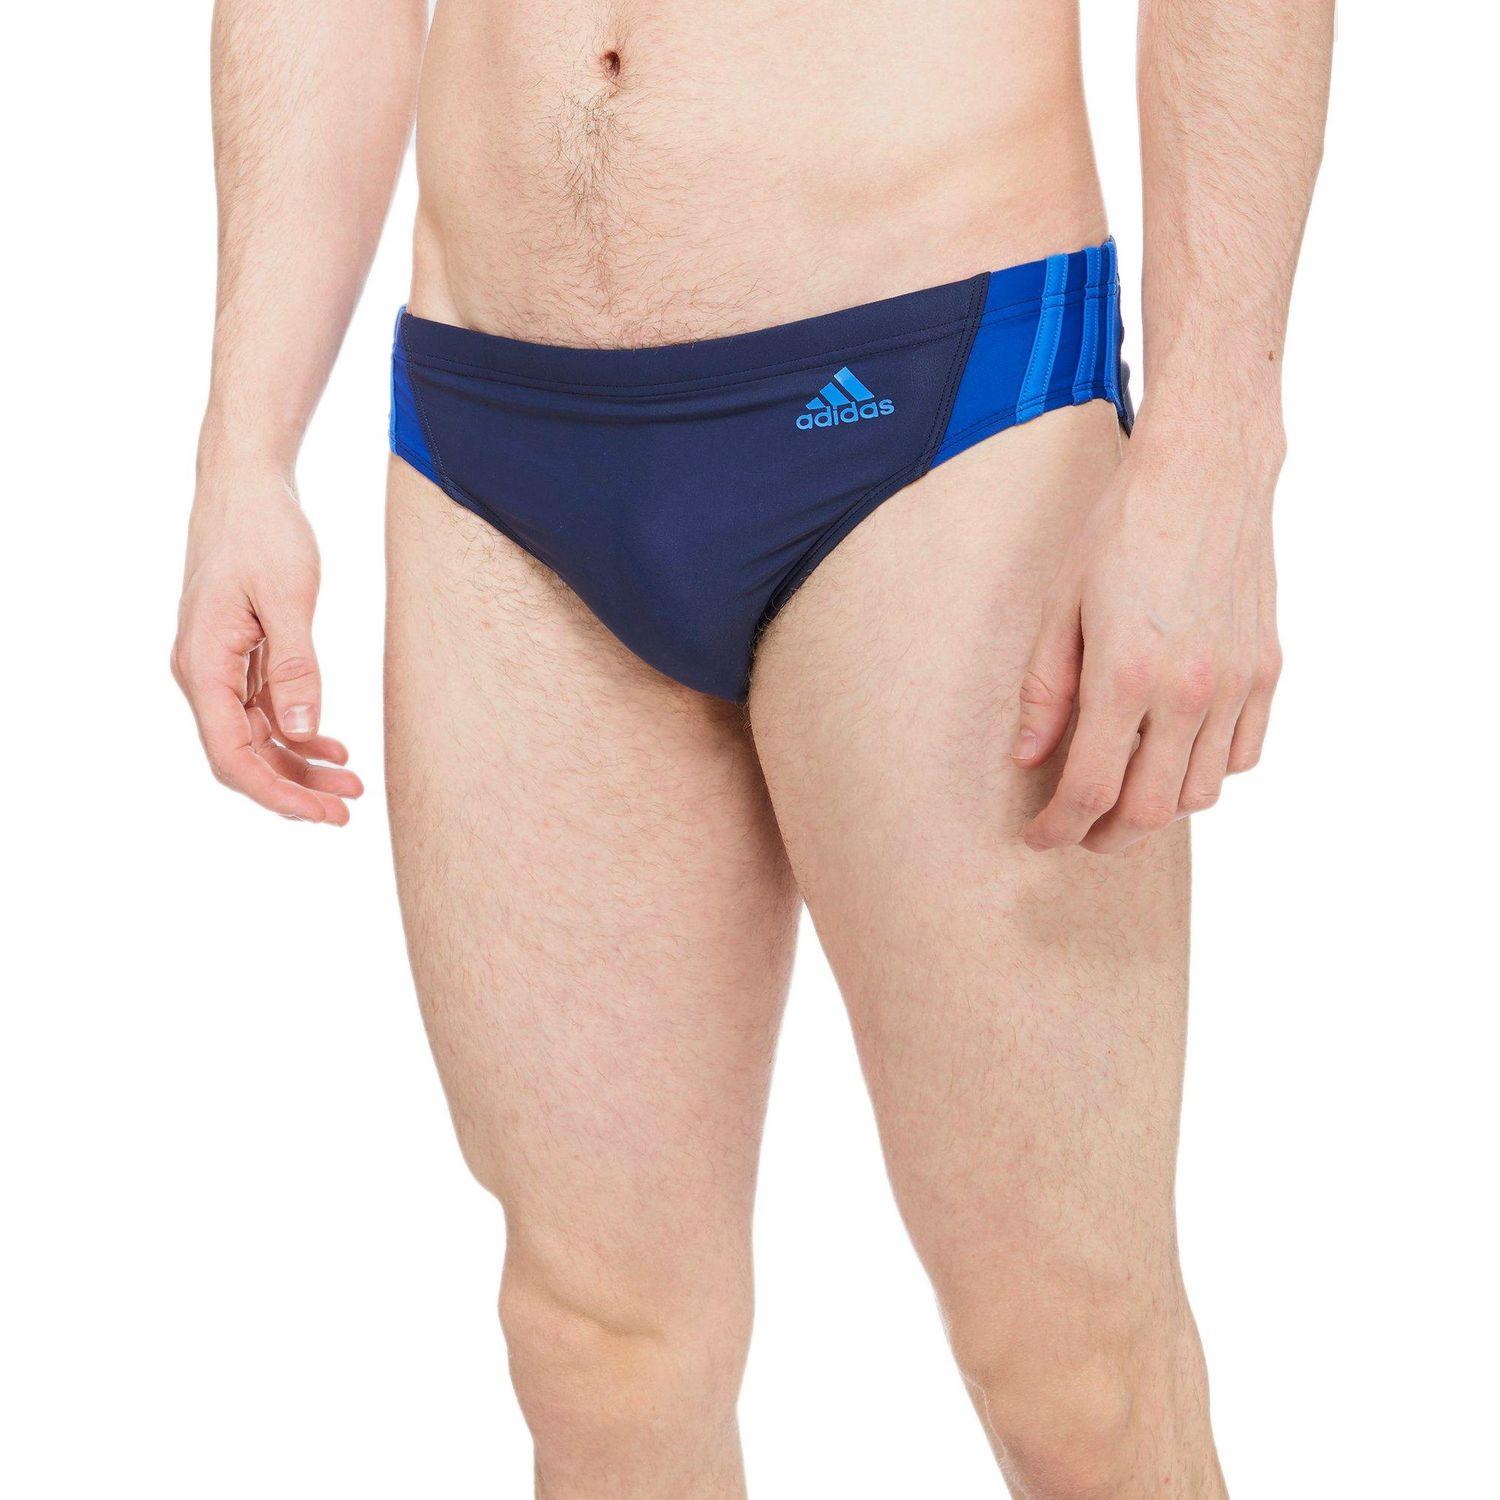 adidas Inspiration Swimming Trunks in Navy (Blue) for Men - Lyst